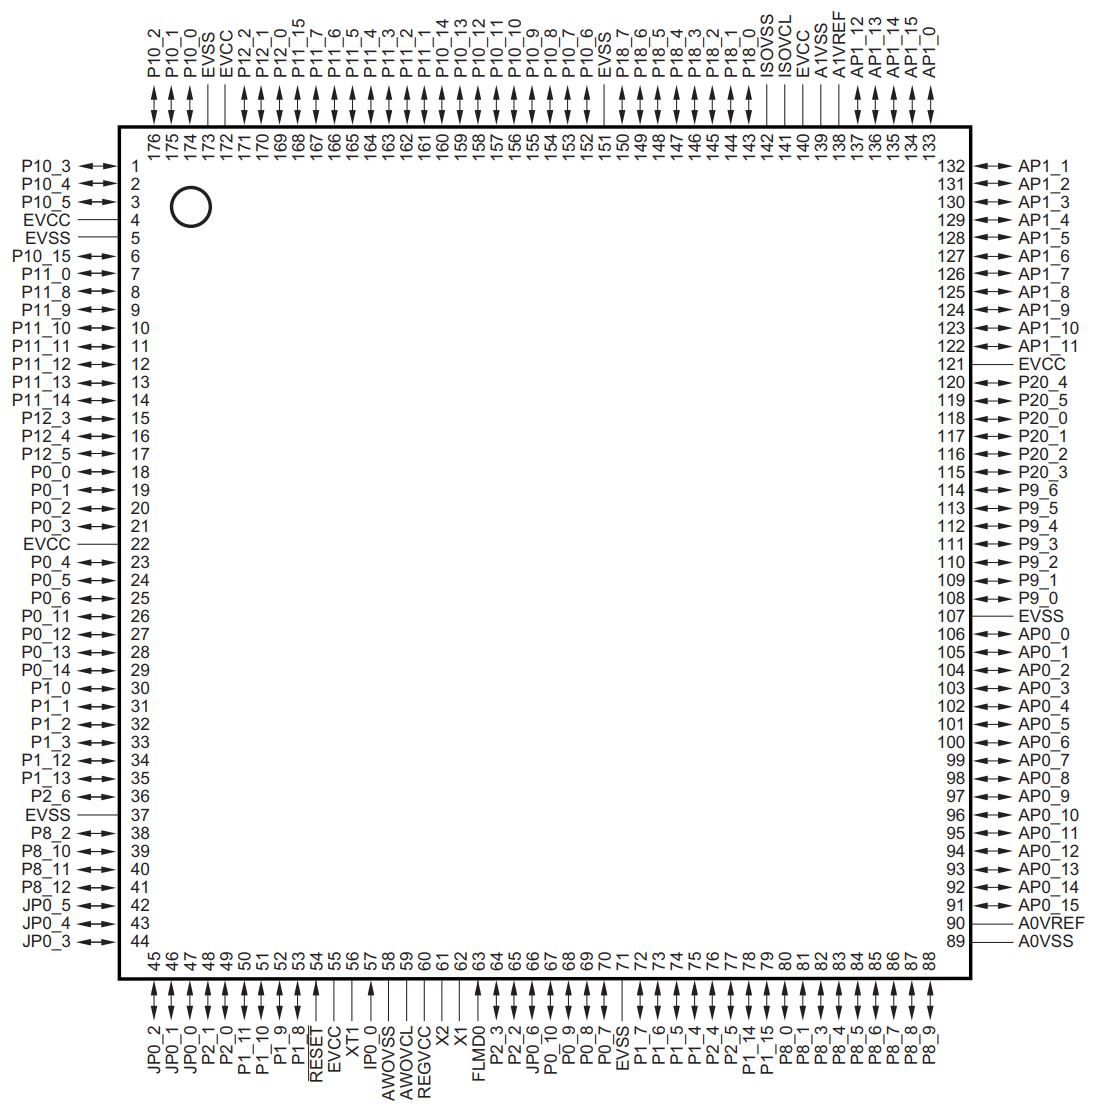 RH850/F1K - Pin Diagram (176-pin LQFP)